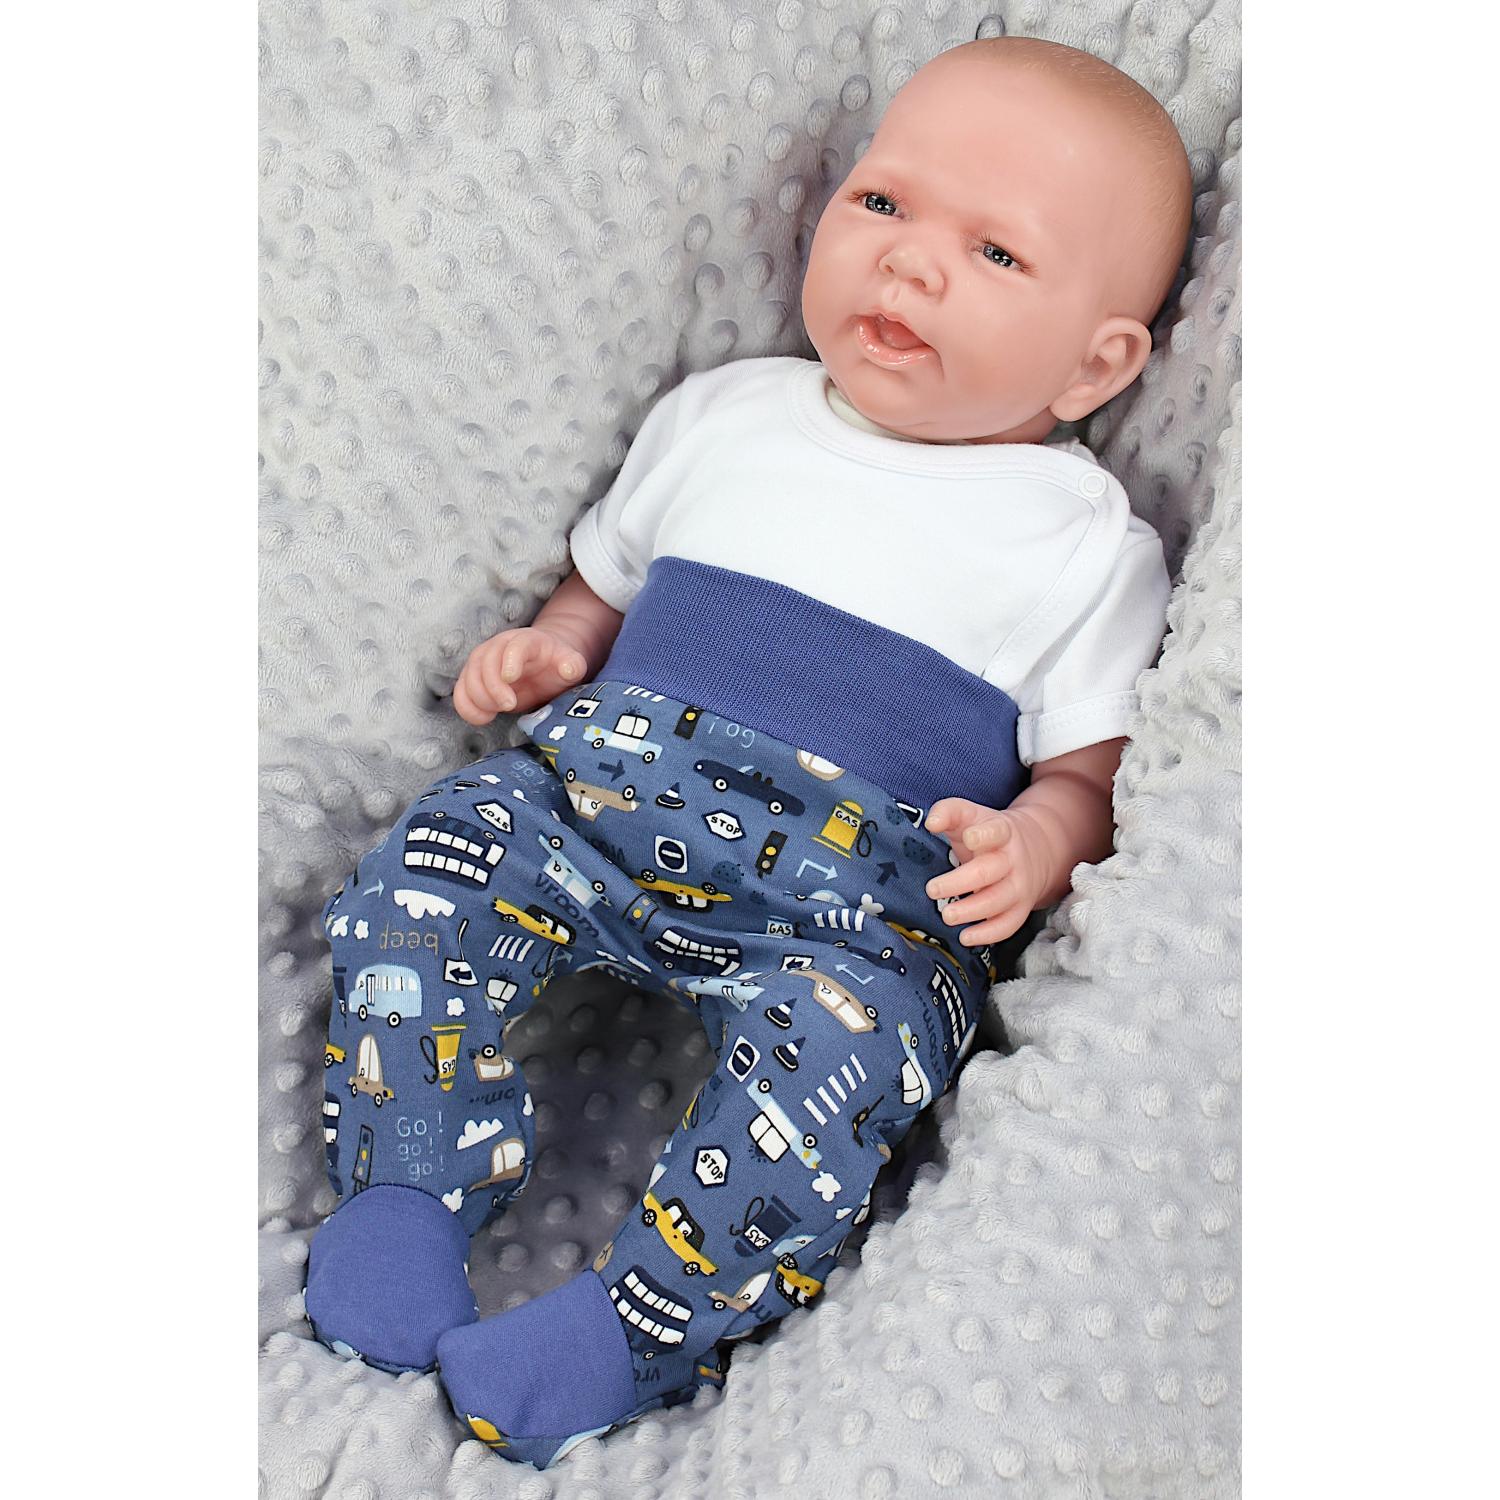 Baby Strampelhose mit Fuß - 3er Set